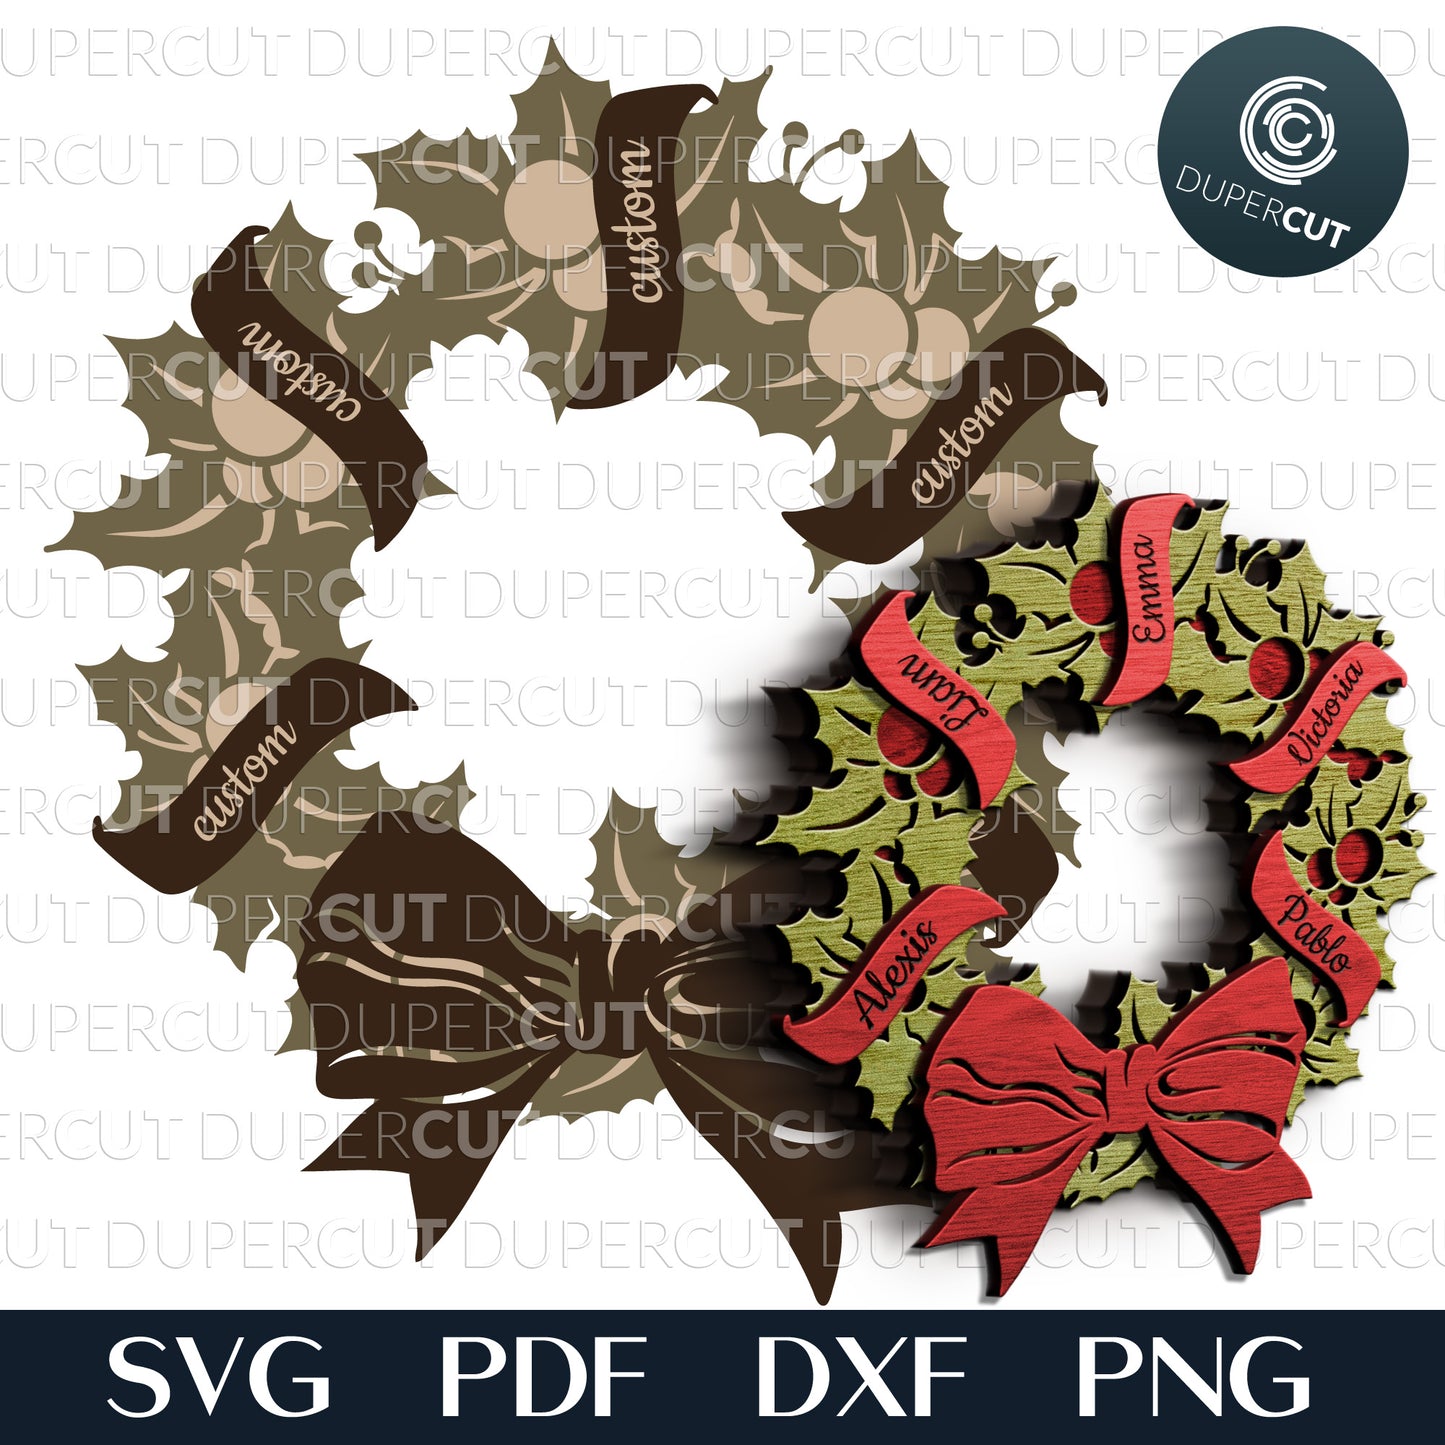 Christmas poinsettia wreath door hanger pattern - SVG DXF layered cutting files for Glowforge, Cricut, scroll saw, CNC plasma machines by DuperCut.com